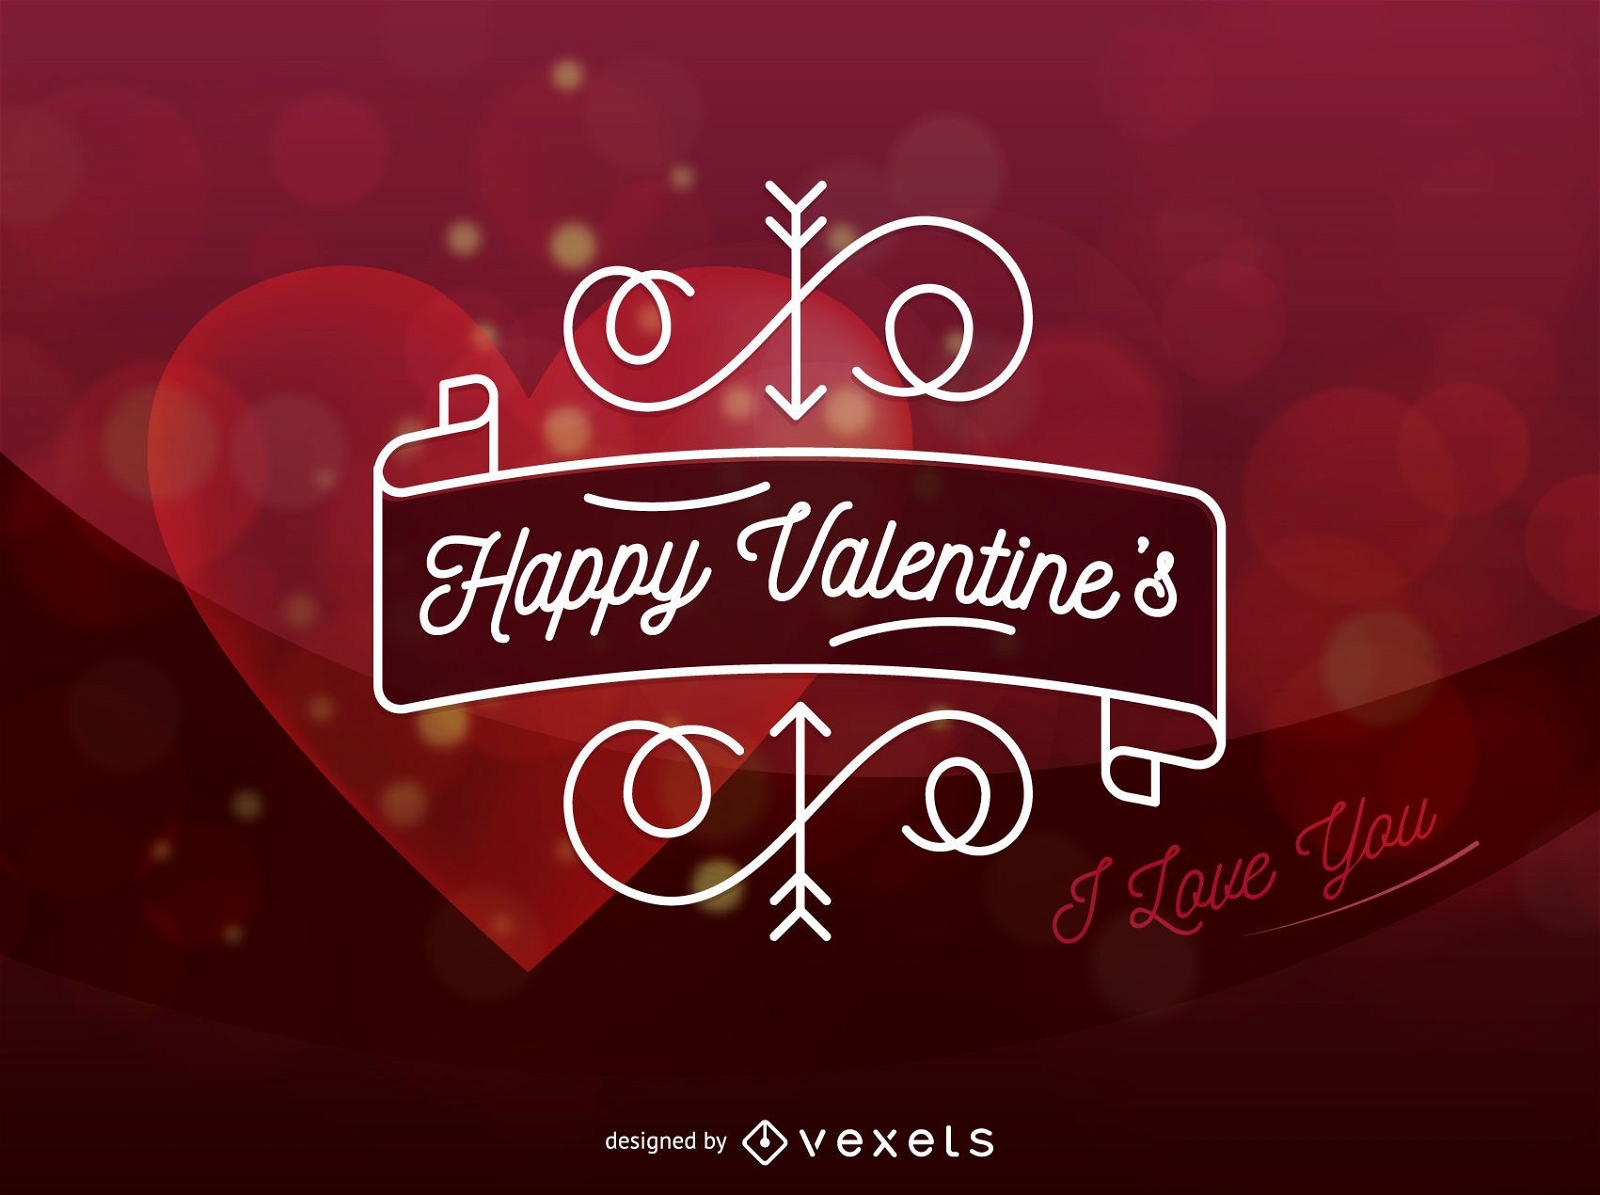 Happy Valentine's Day Heart Vector Card - Vector download